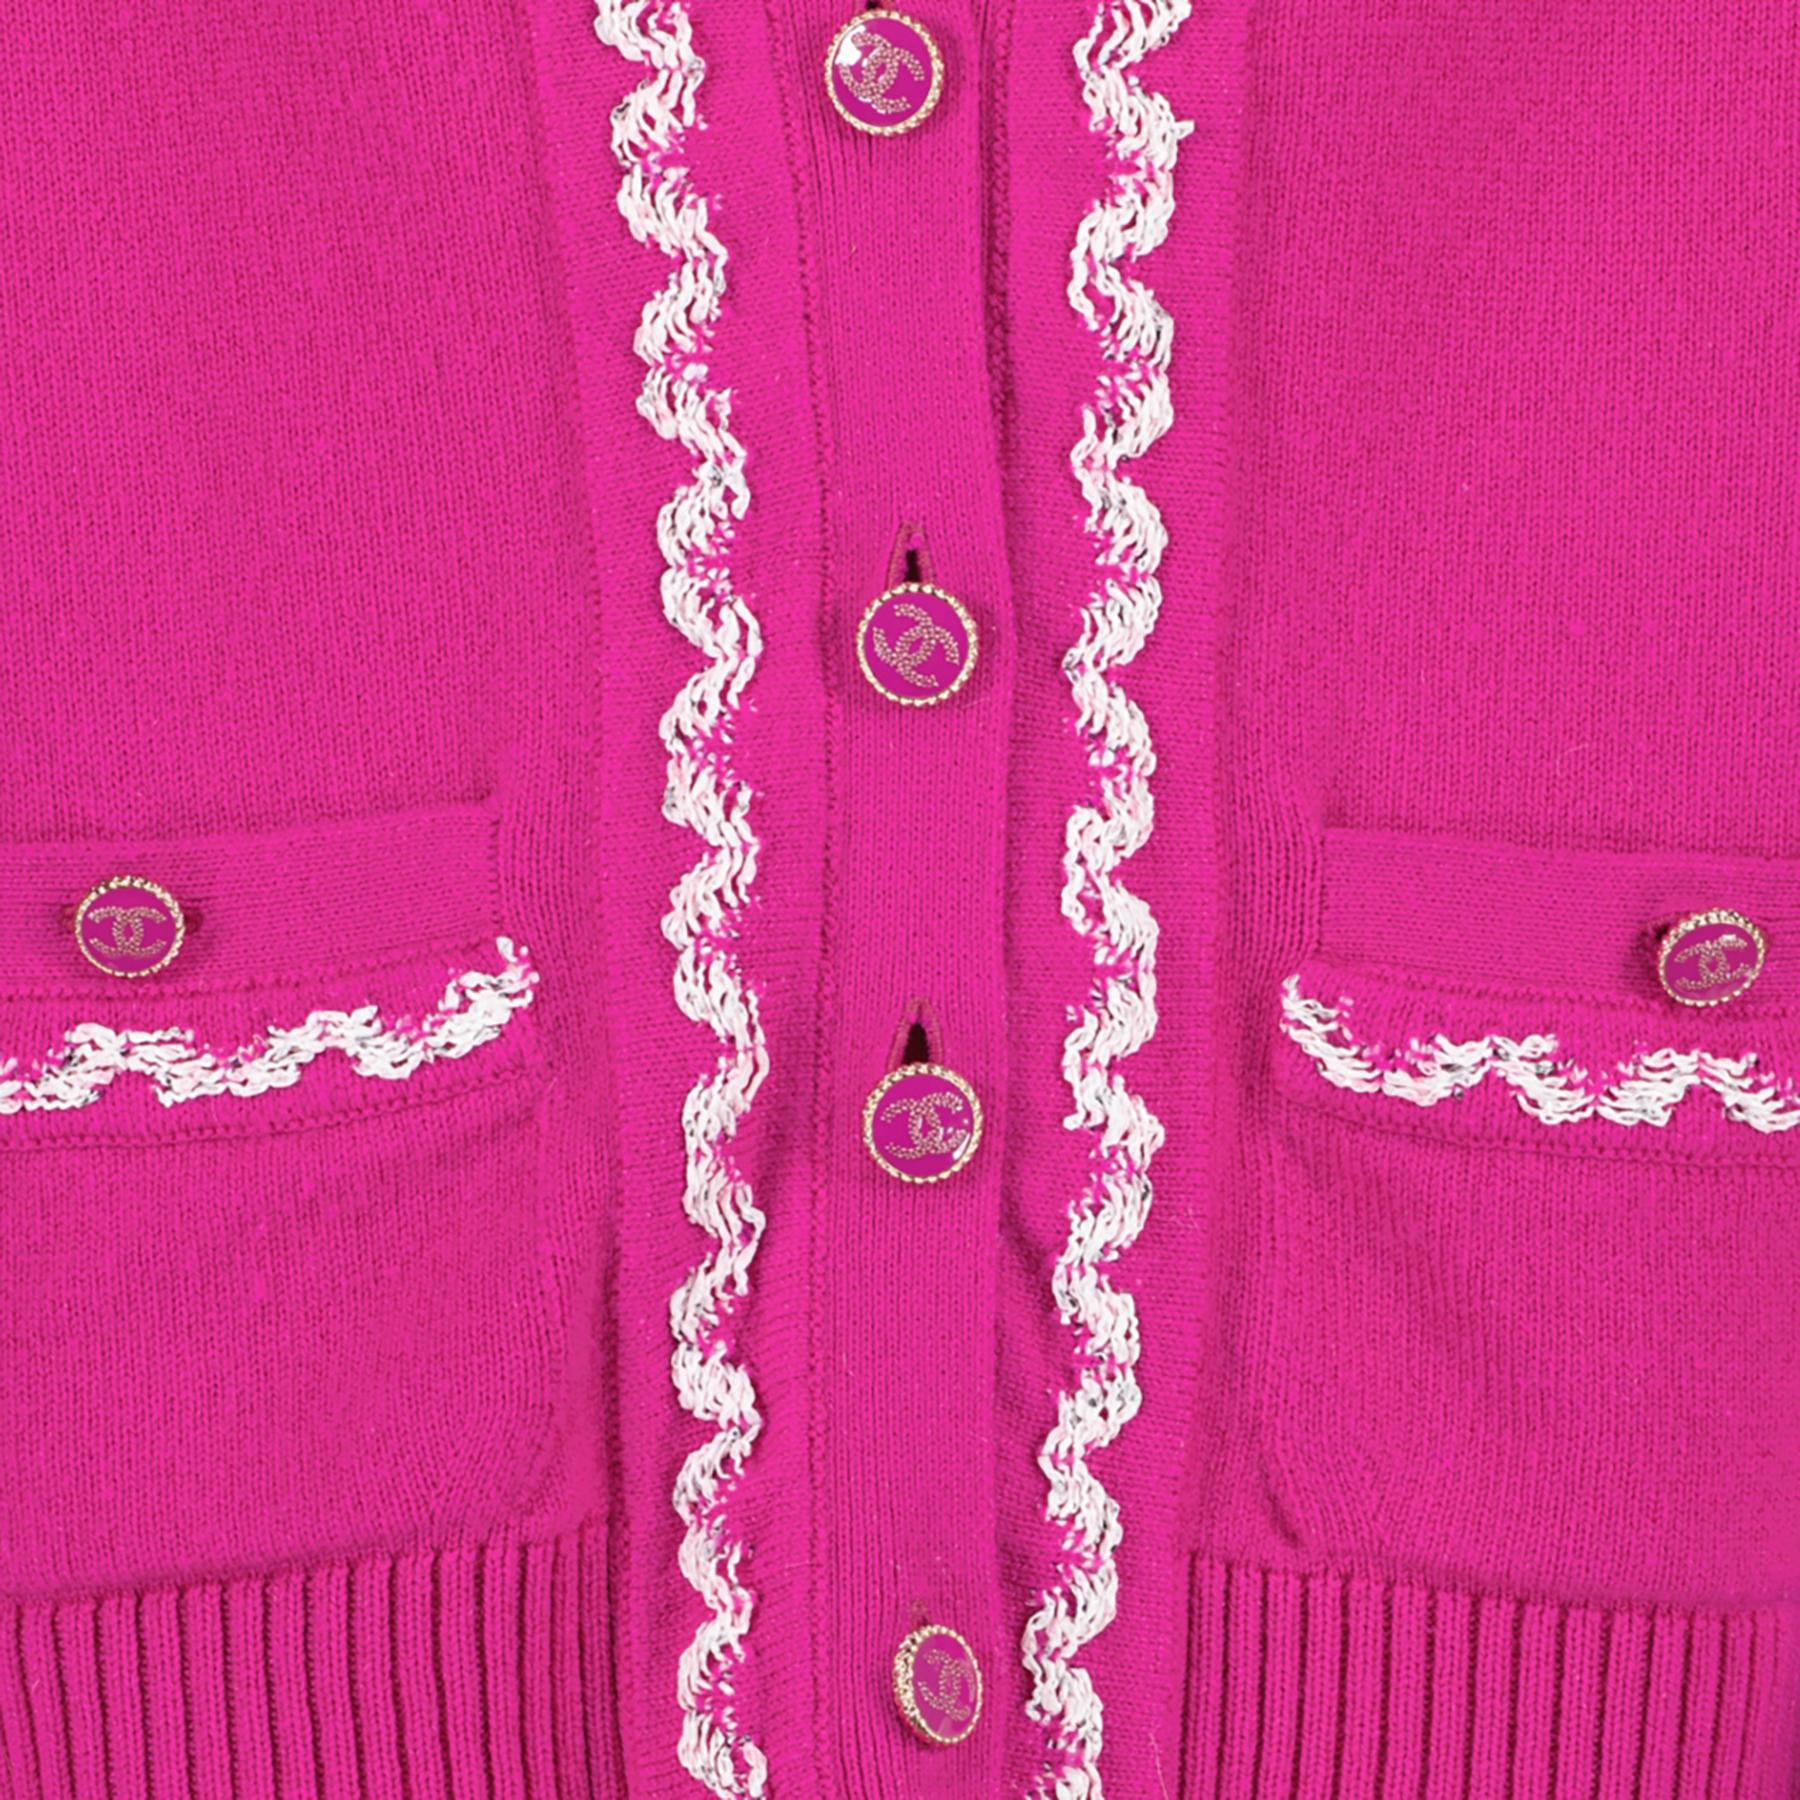 chanel pink cardigan 2021